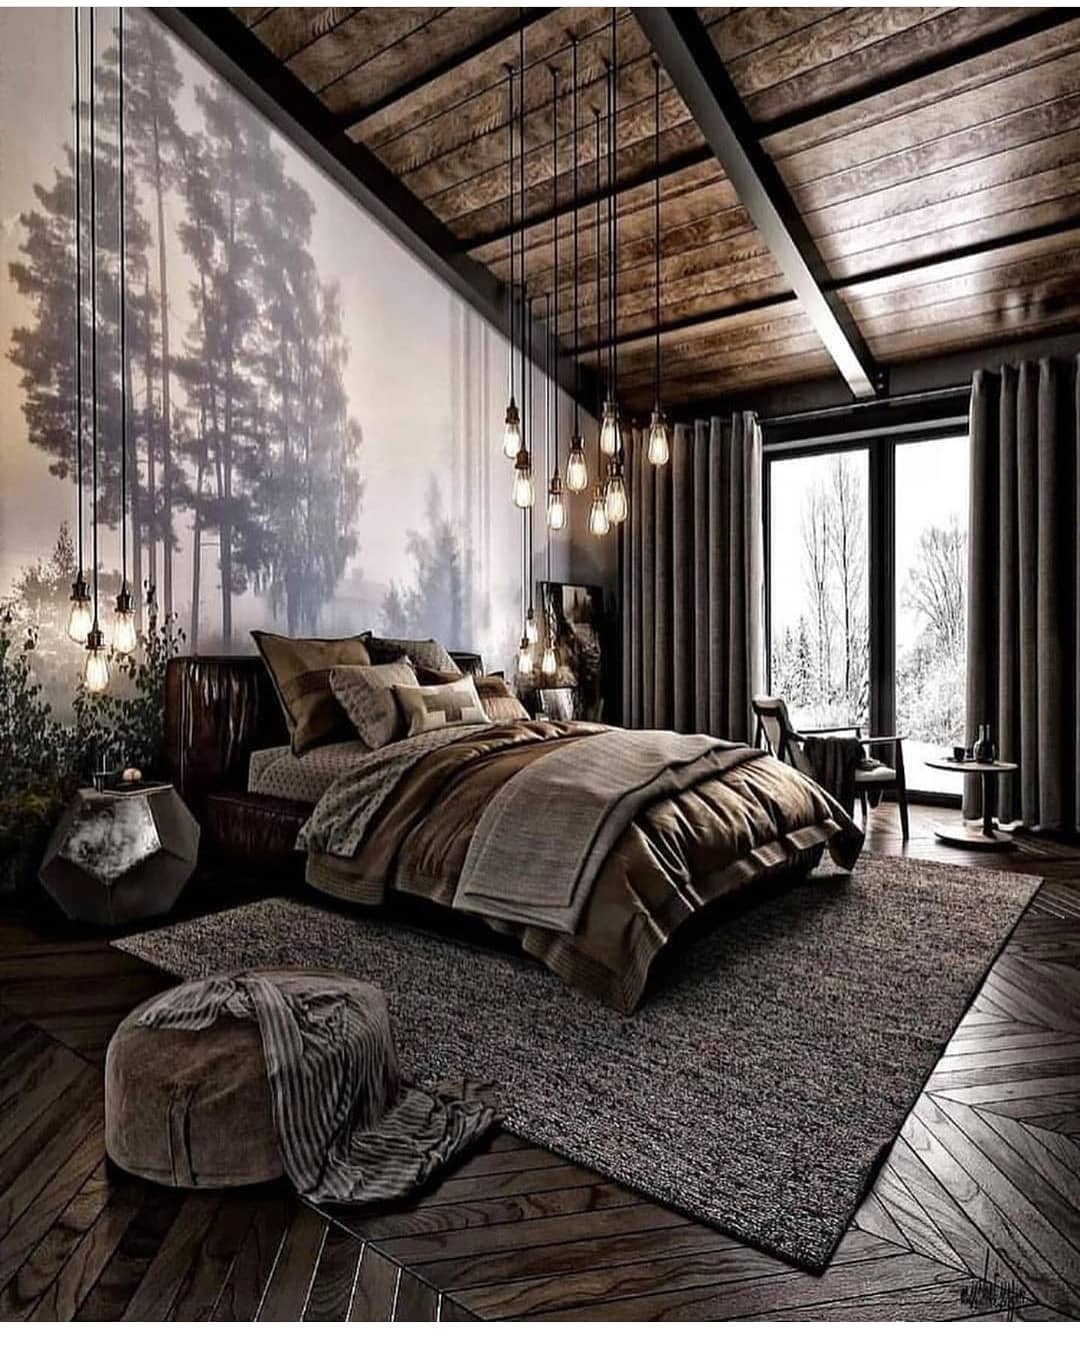 Brown and wood bedroom